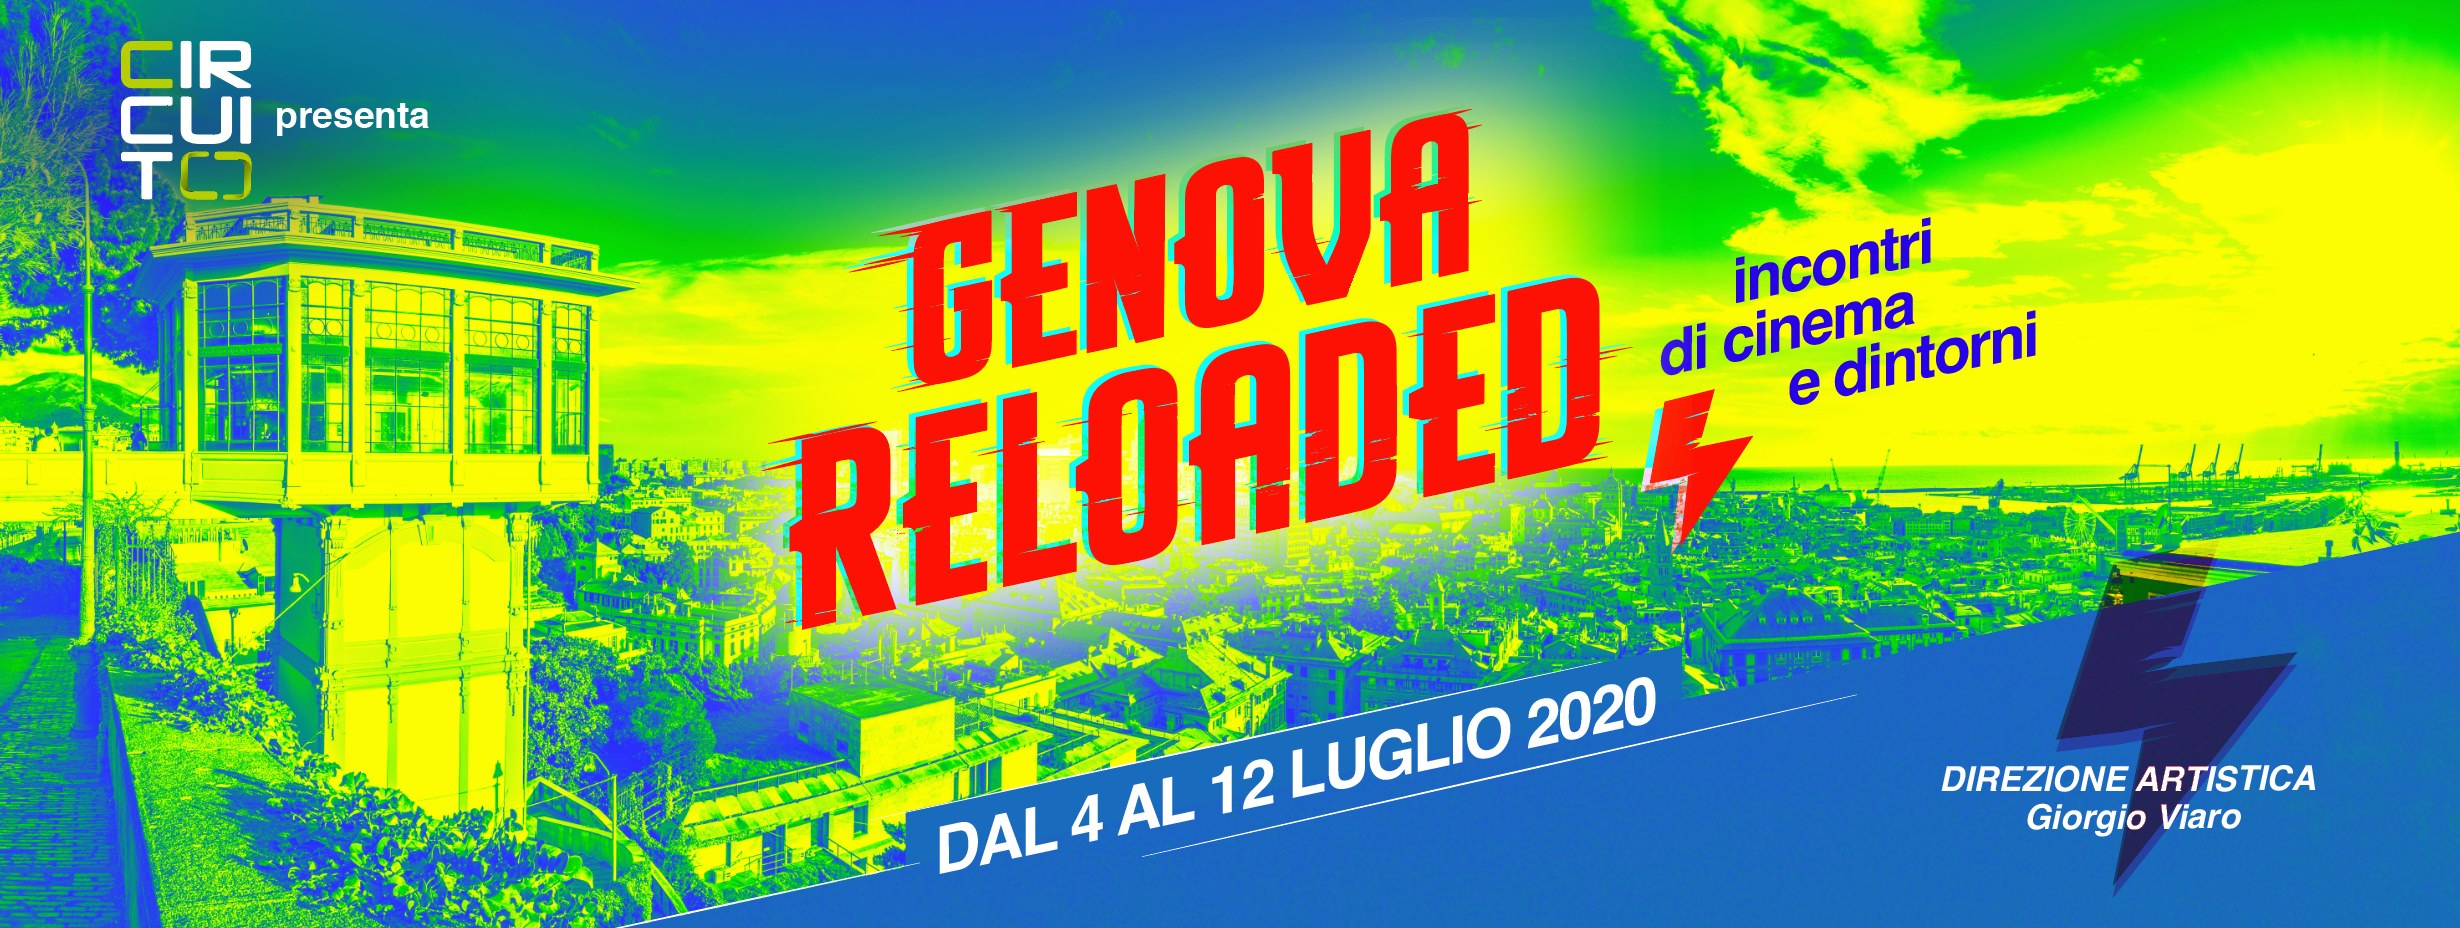 Genova Reloaded Festival 2020